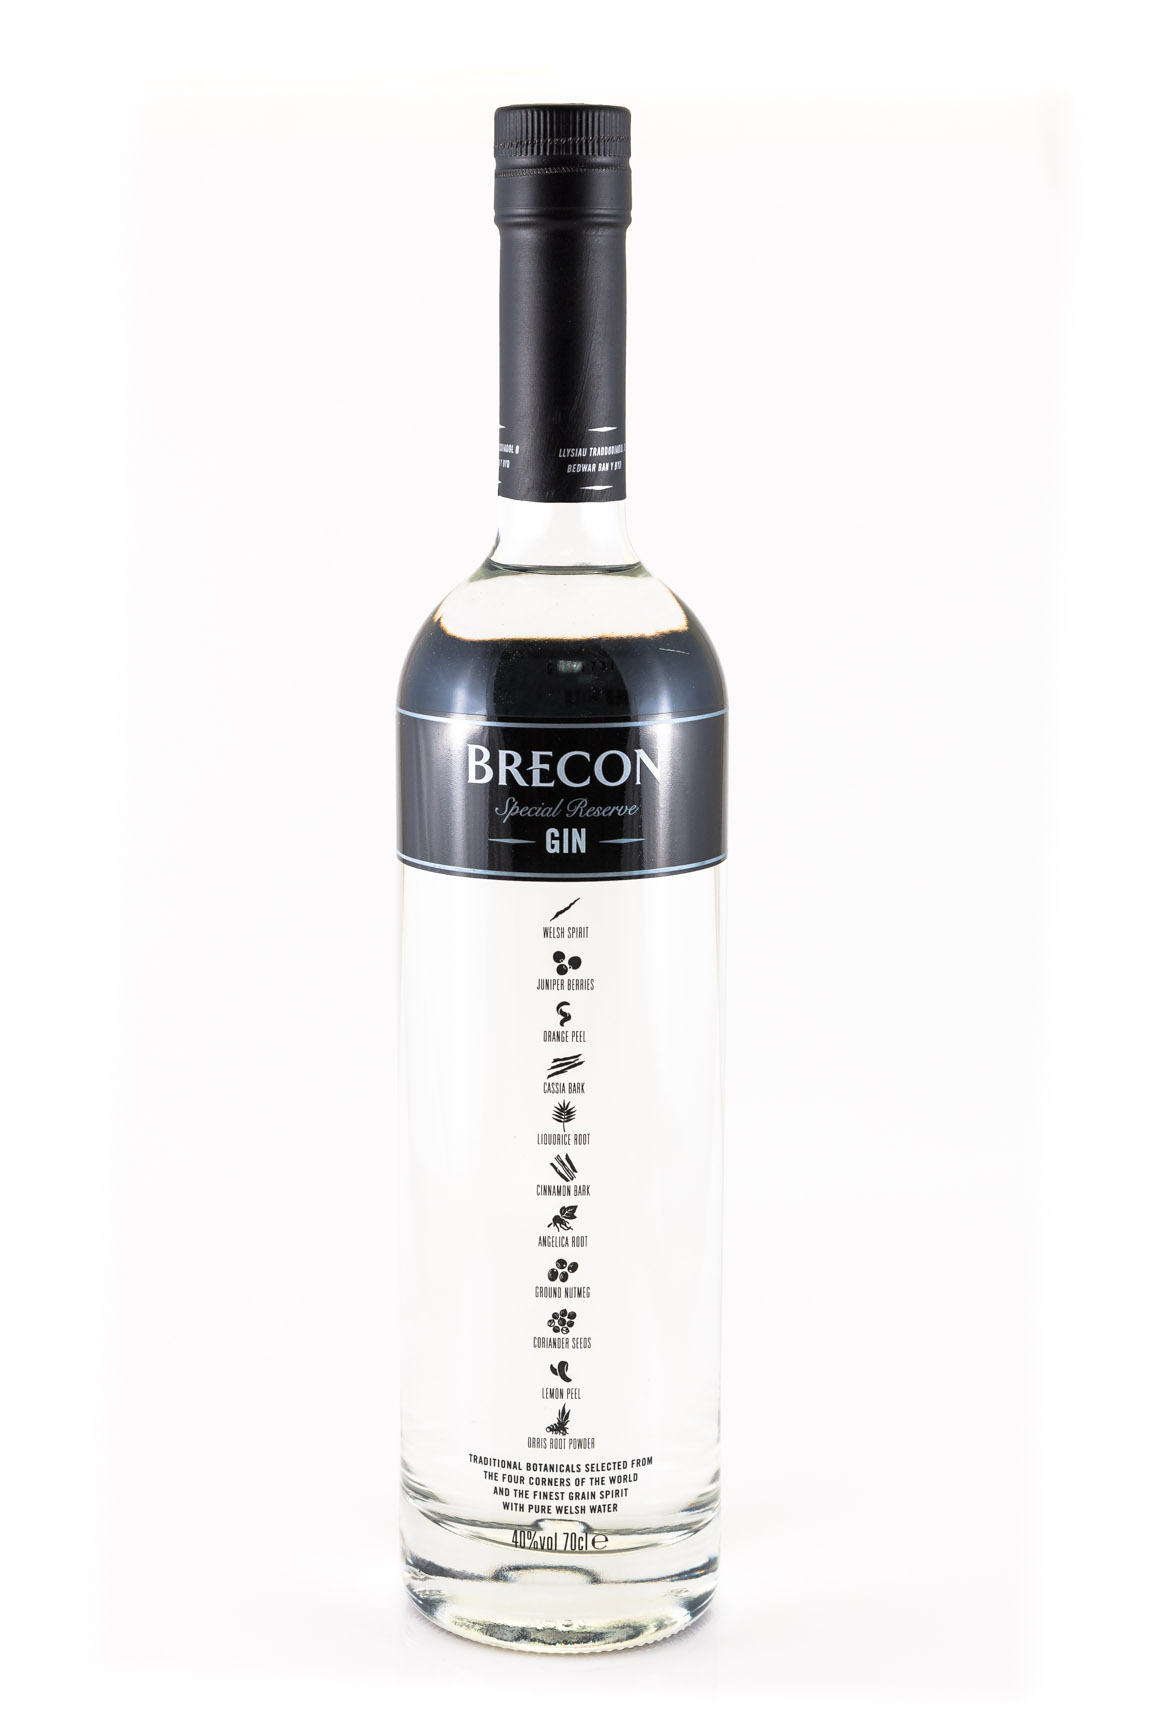 Brecon Special Reserve Gin 9529